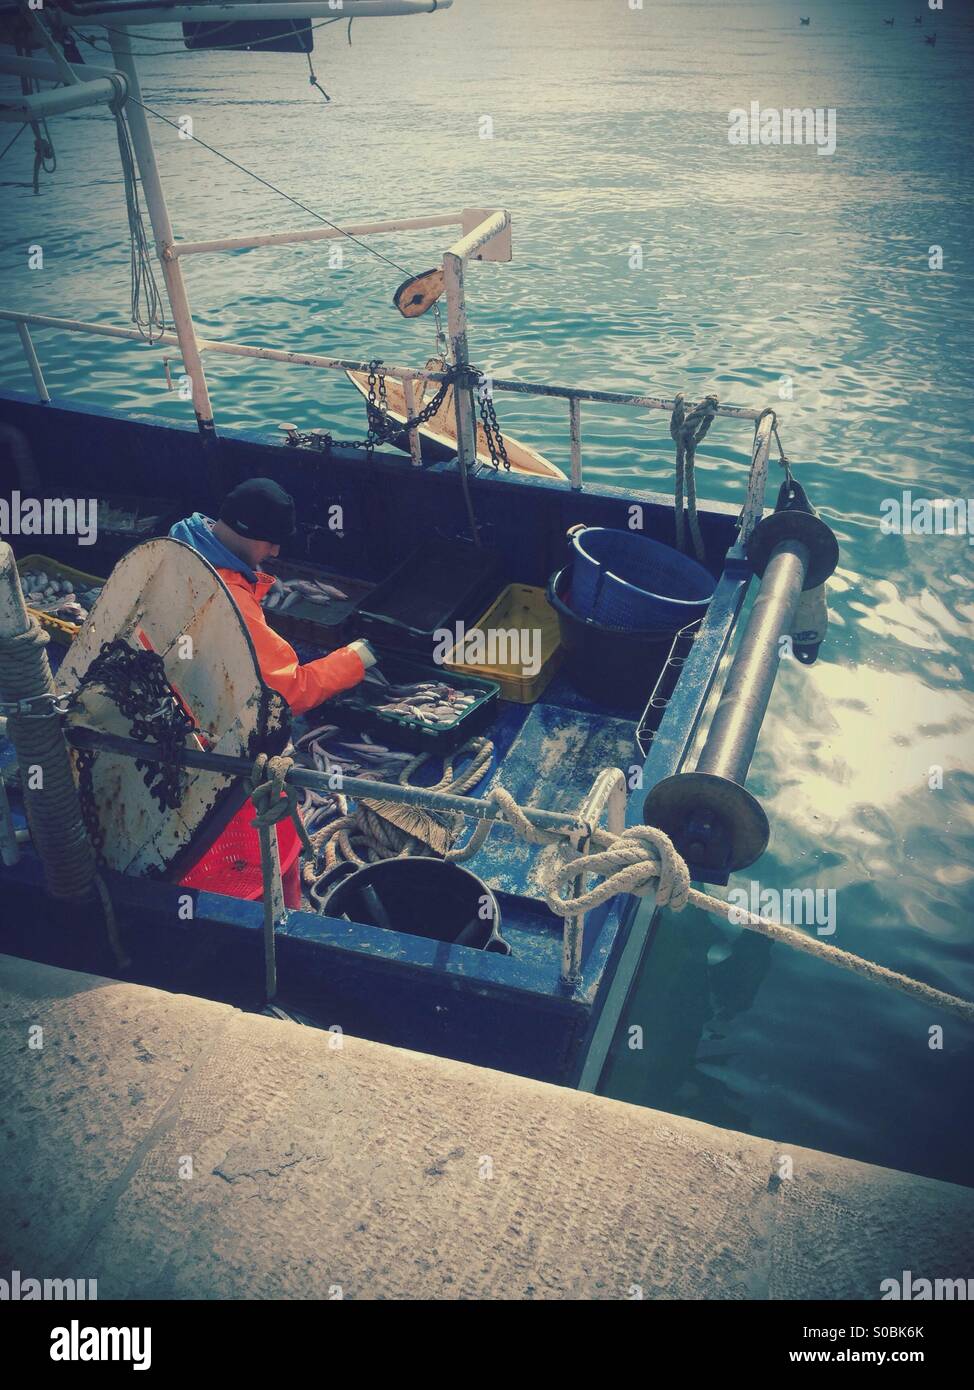 Fisherman working on boat Stock Photo